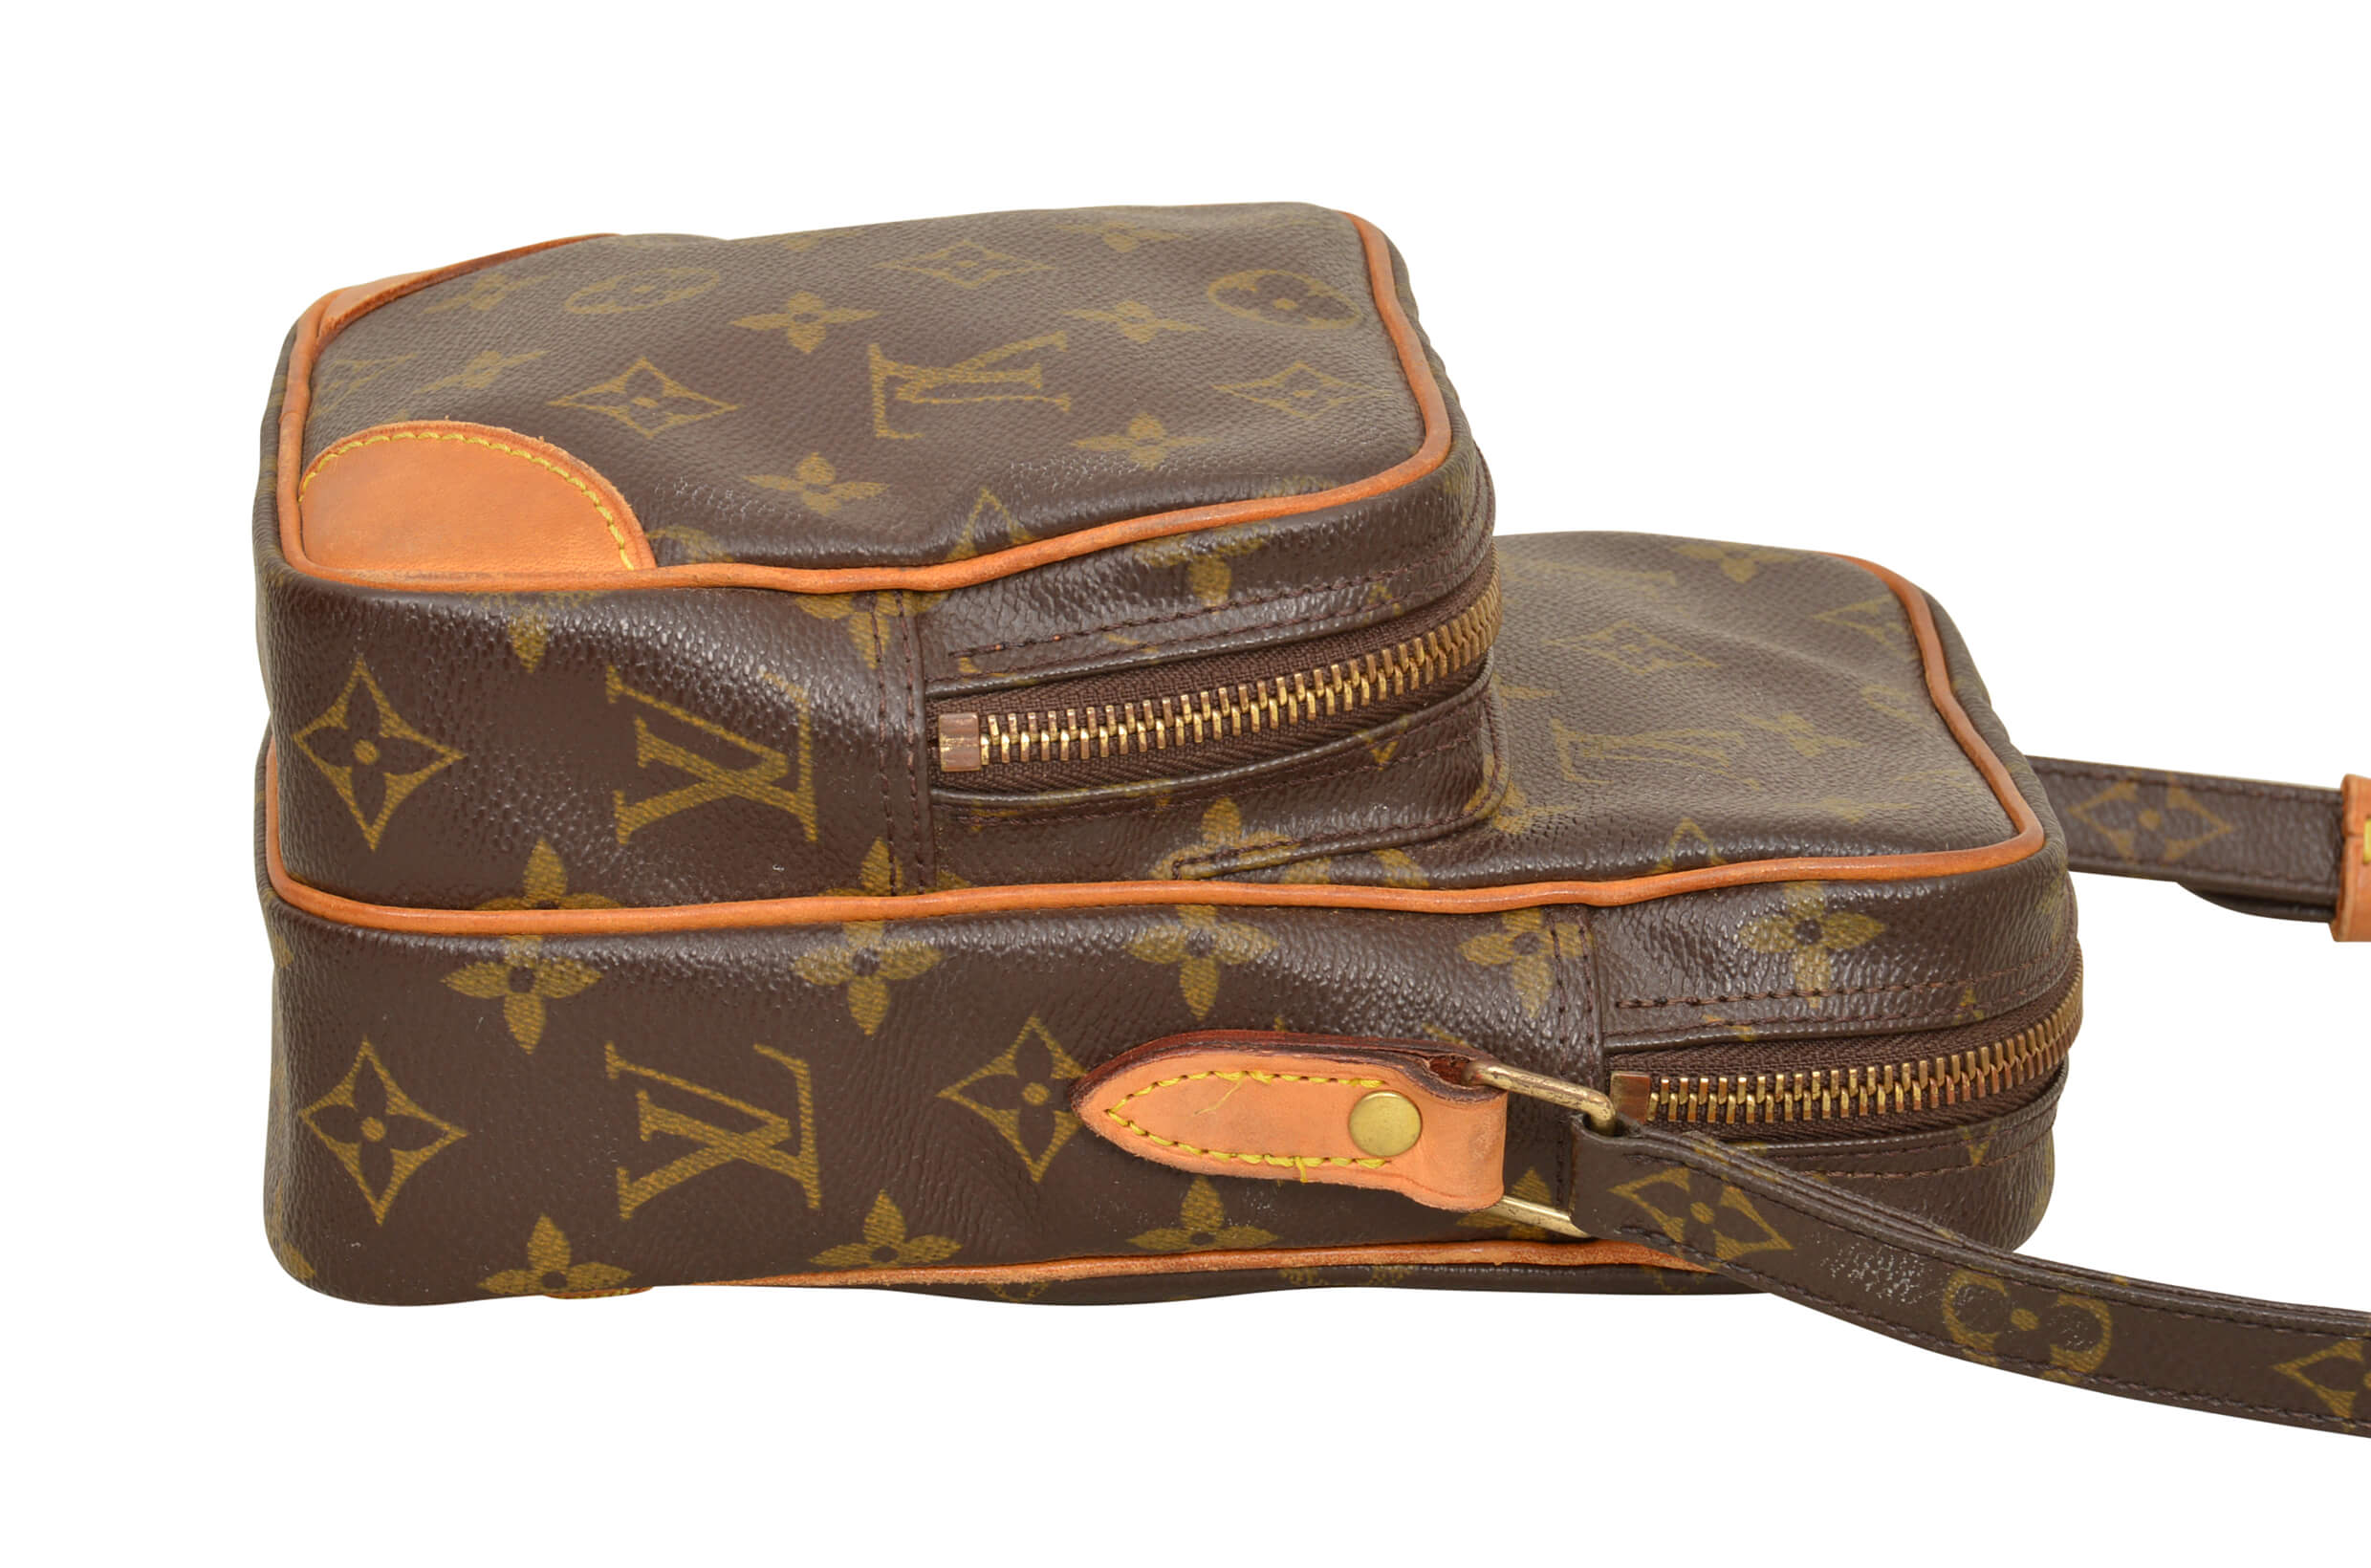 Ebay Louis Vuitton Handbags Uk | Confederated Tribes of the Umatilla Indian Reservation